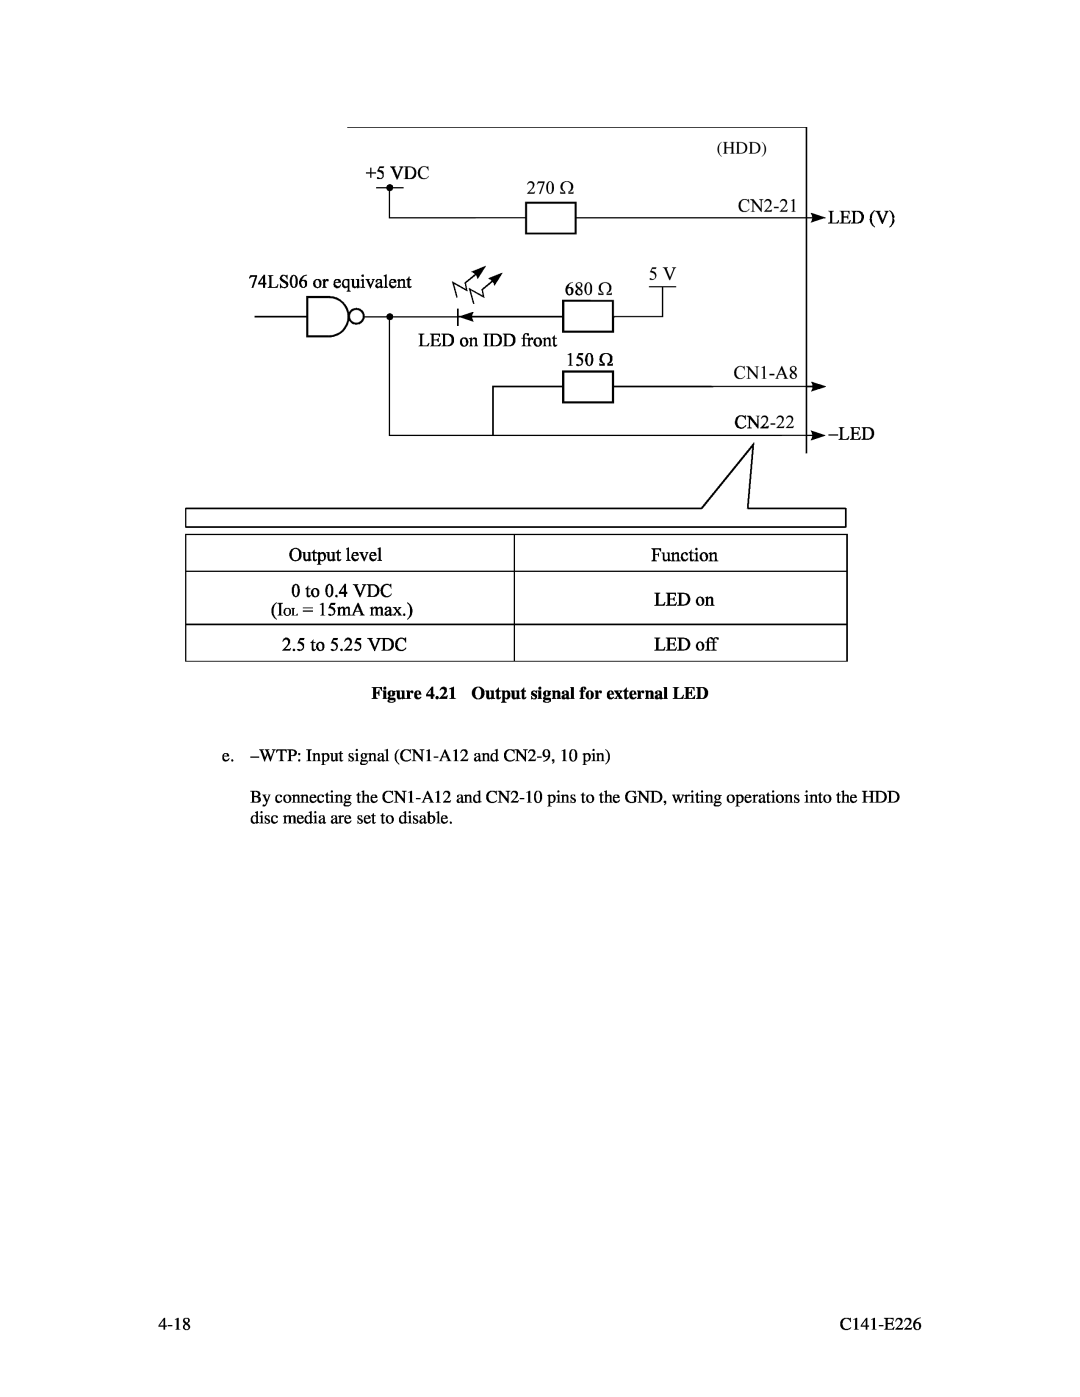 Fujitsu MAW3147NC/NP 21 Output signal for external LED, e. -WTP Input signal CN1-A12 and CN2-9, 10 pin, 4-18, C141-E226 